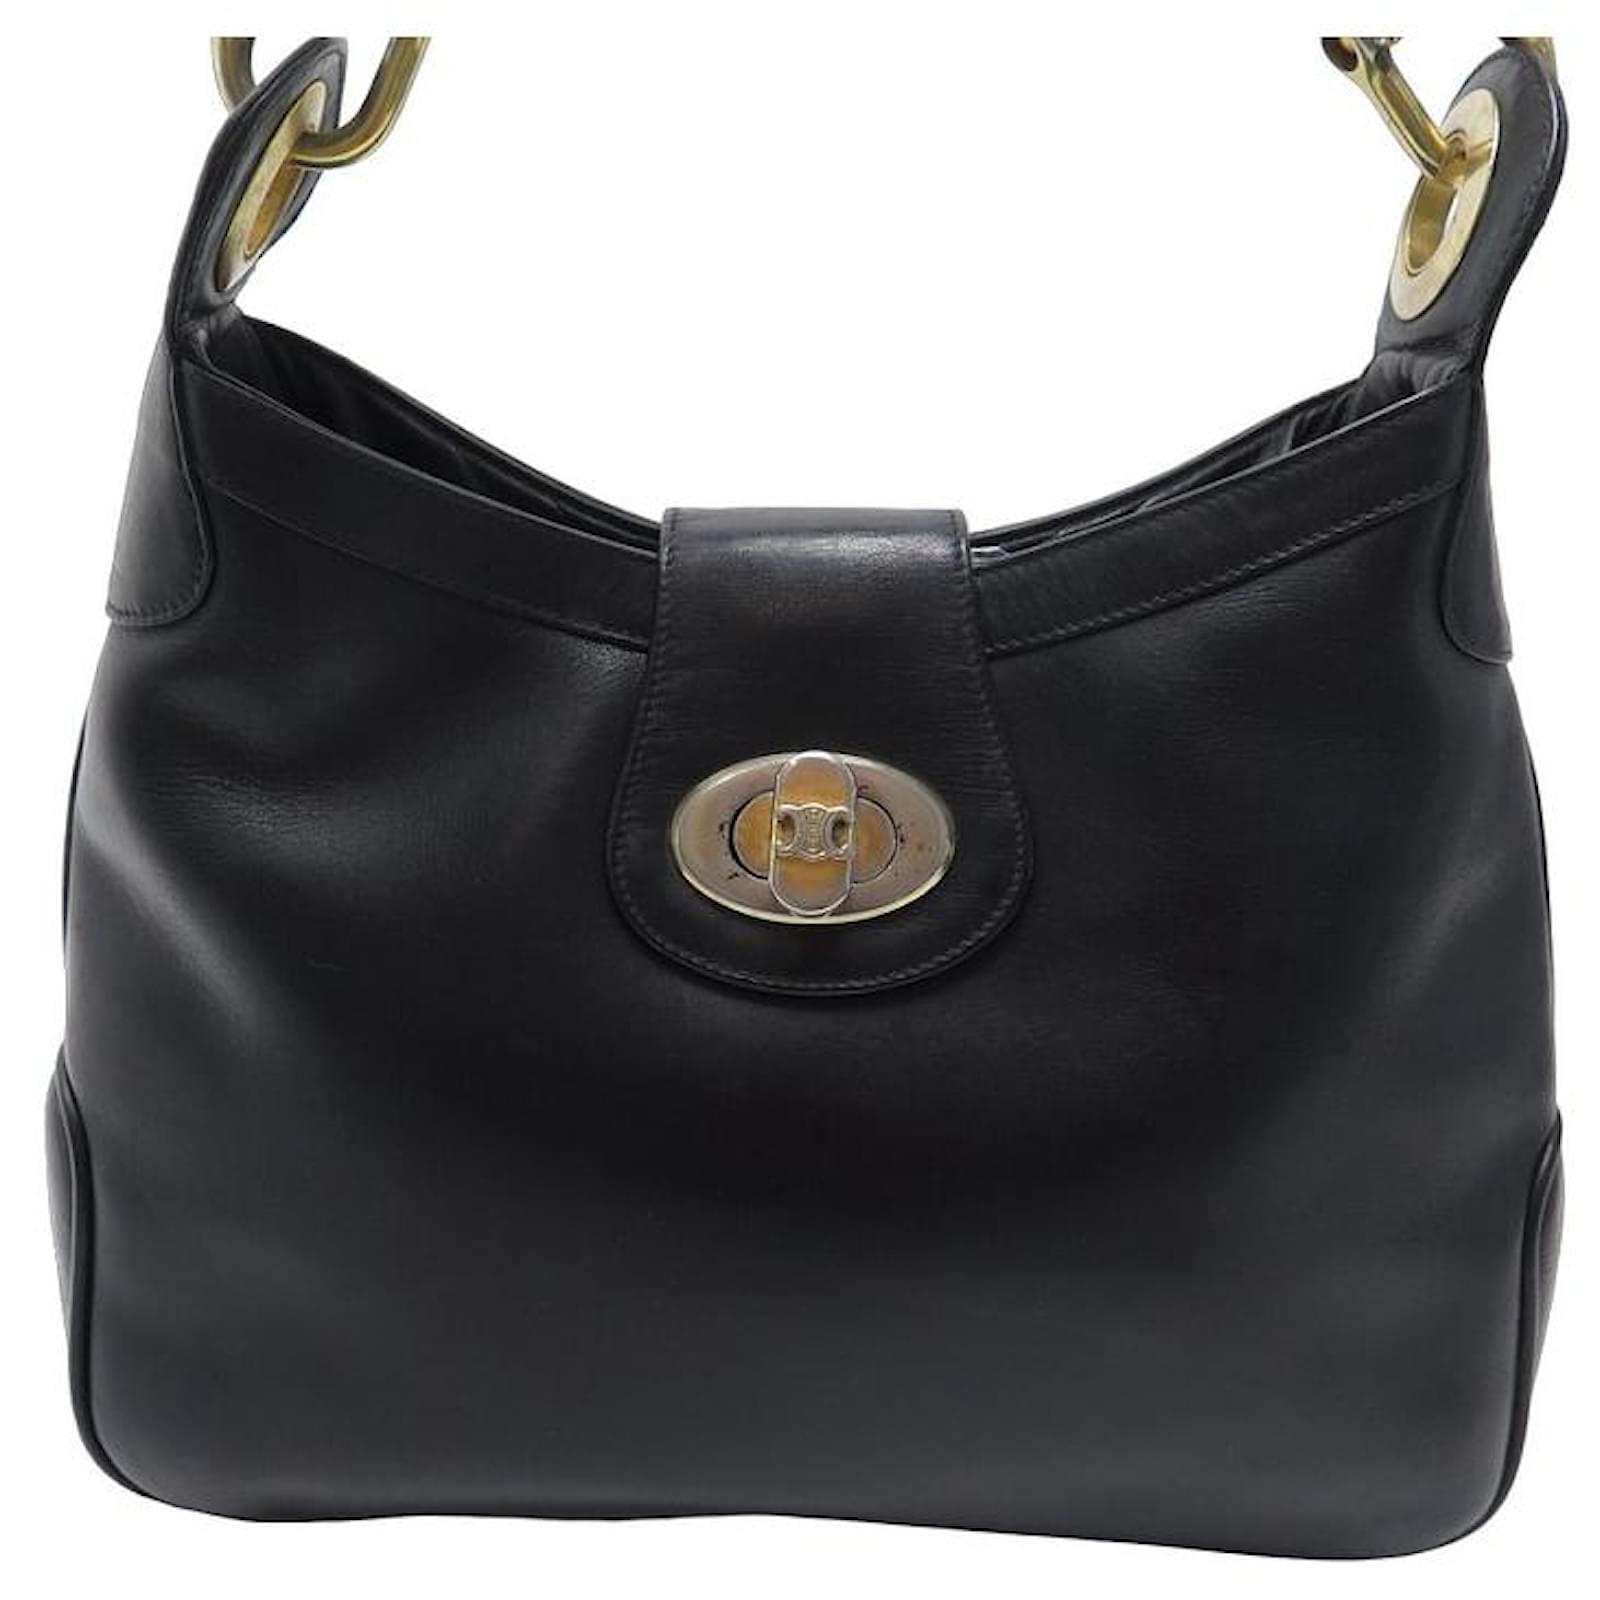 Taupe Leather Top Handle Bag, Soft Taupe Leather Bag, Womens Italian Leather Handbag, Vintage Leather Bag, Leather Handbag with Clasp